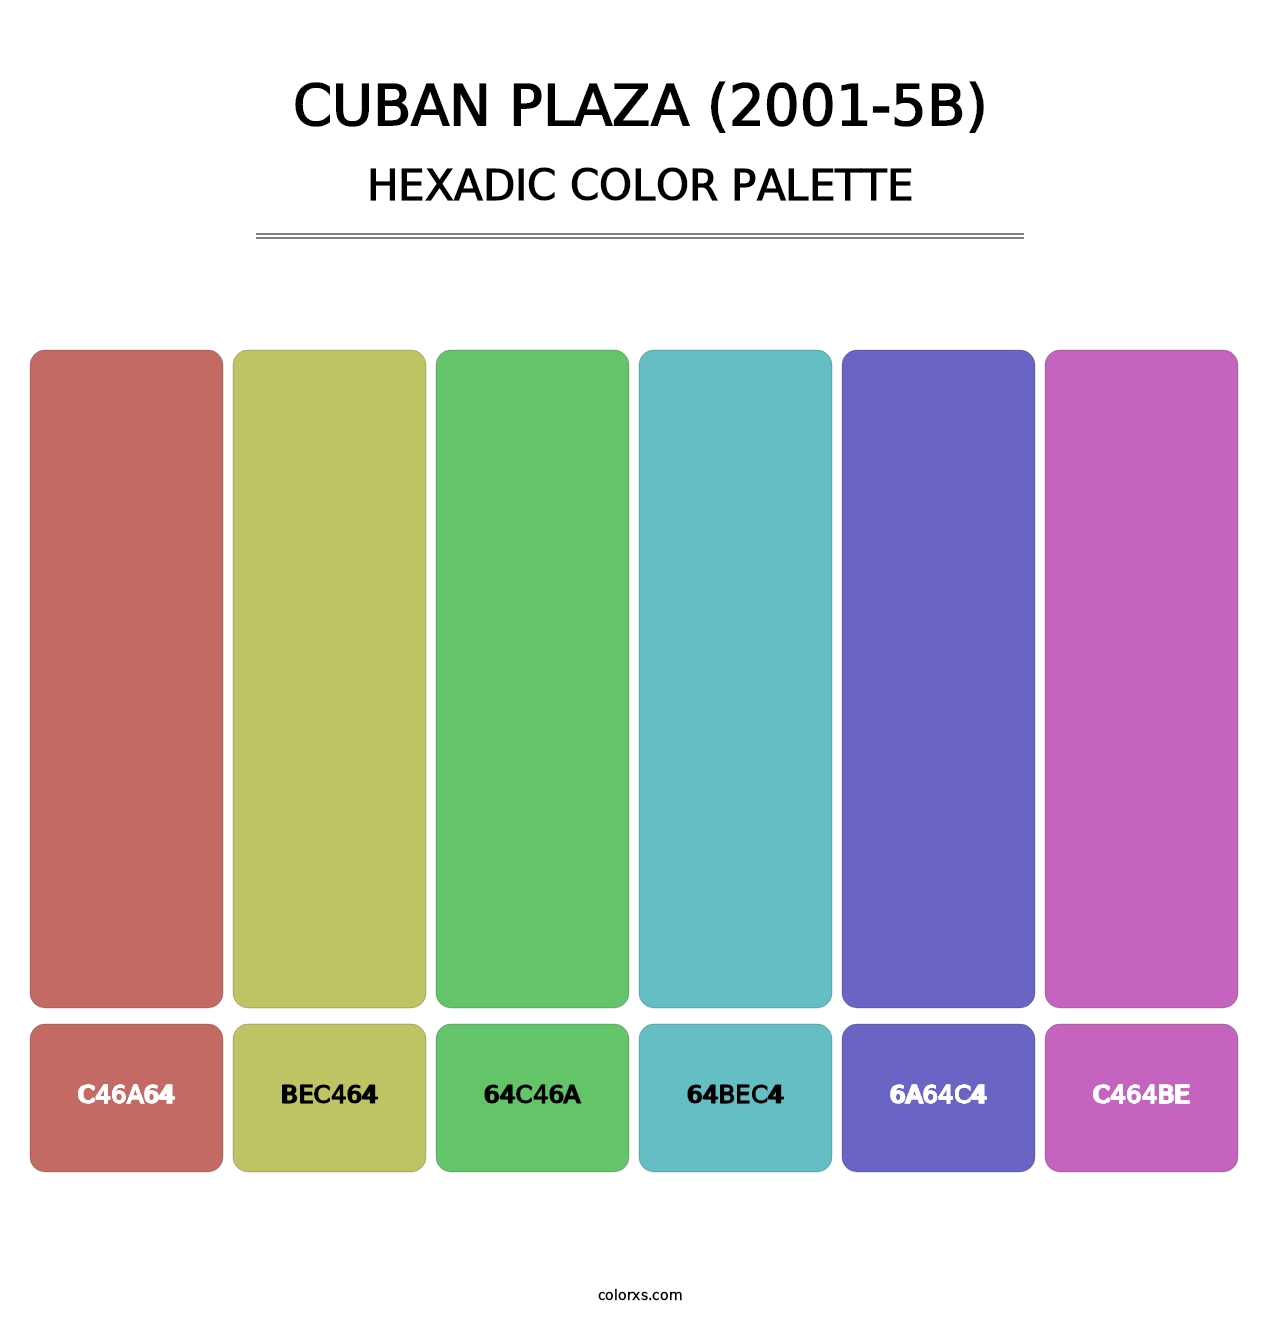 Cuban Plaza (2001-5B) - Hexadic Color Palette